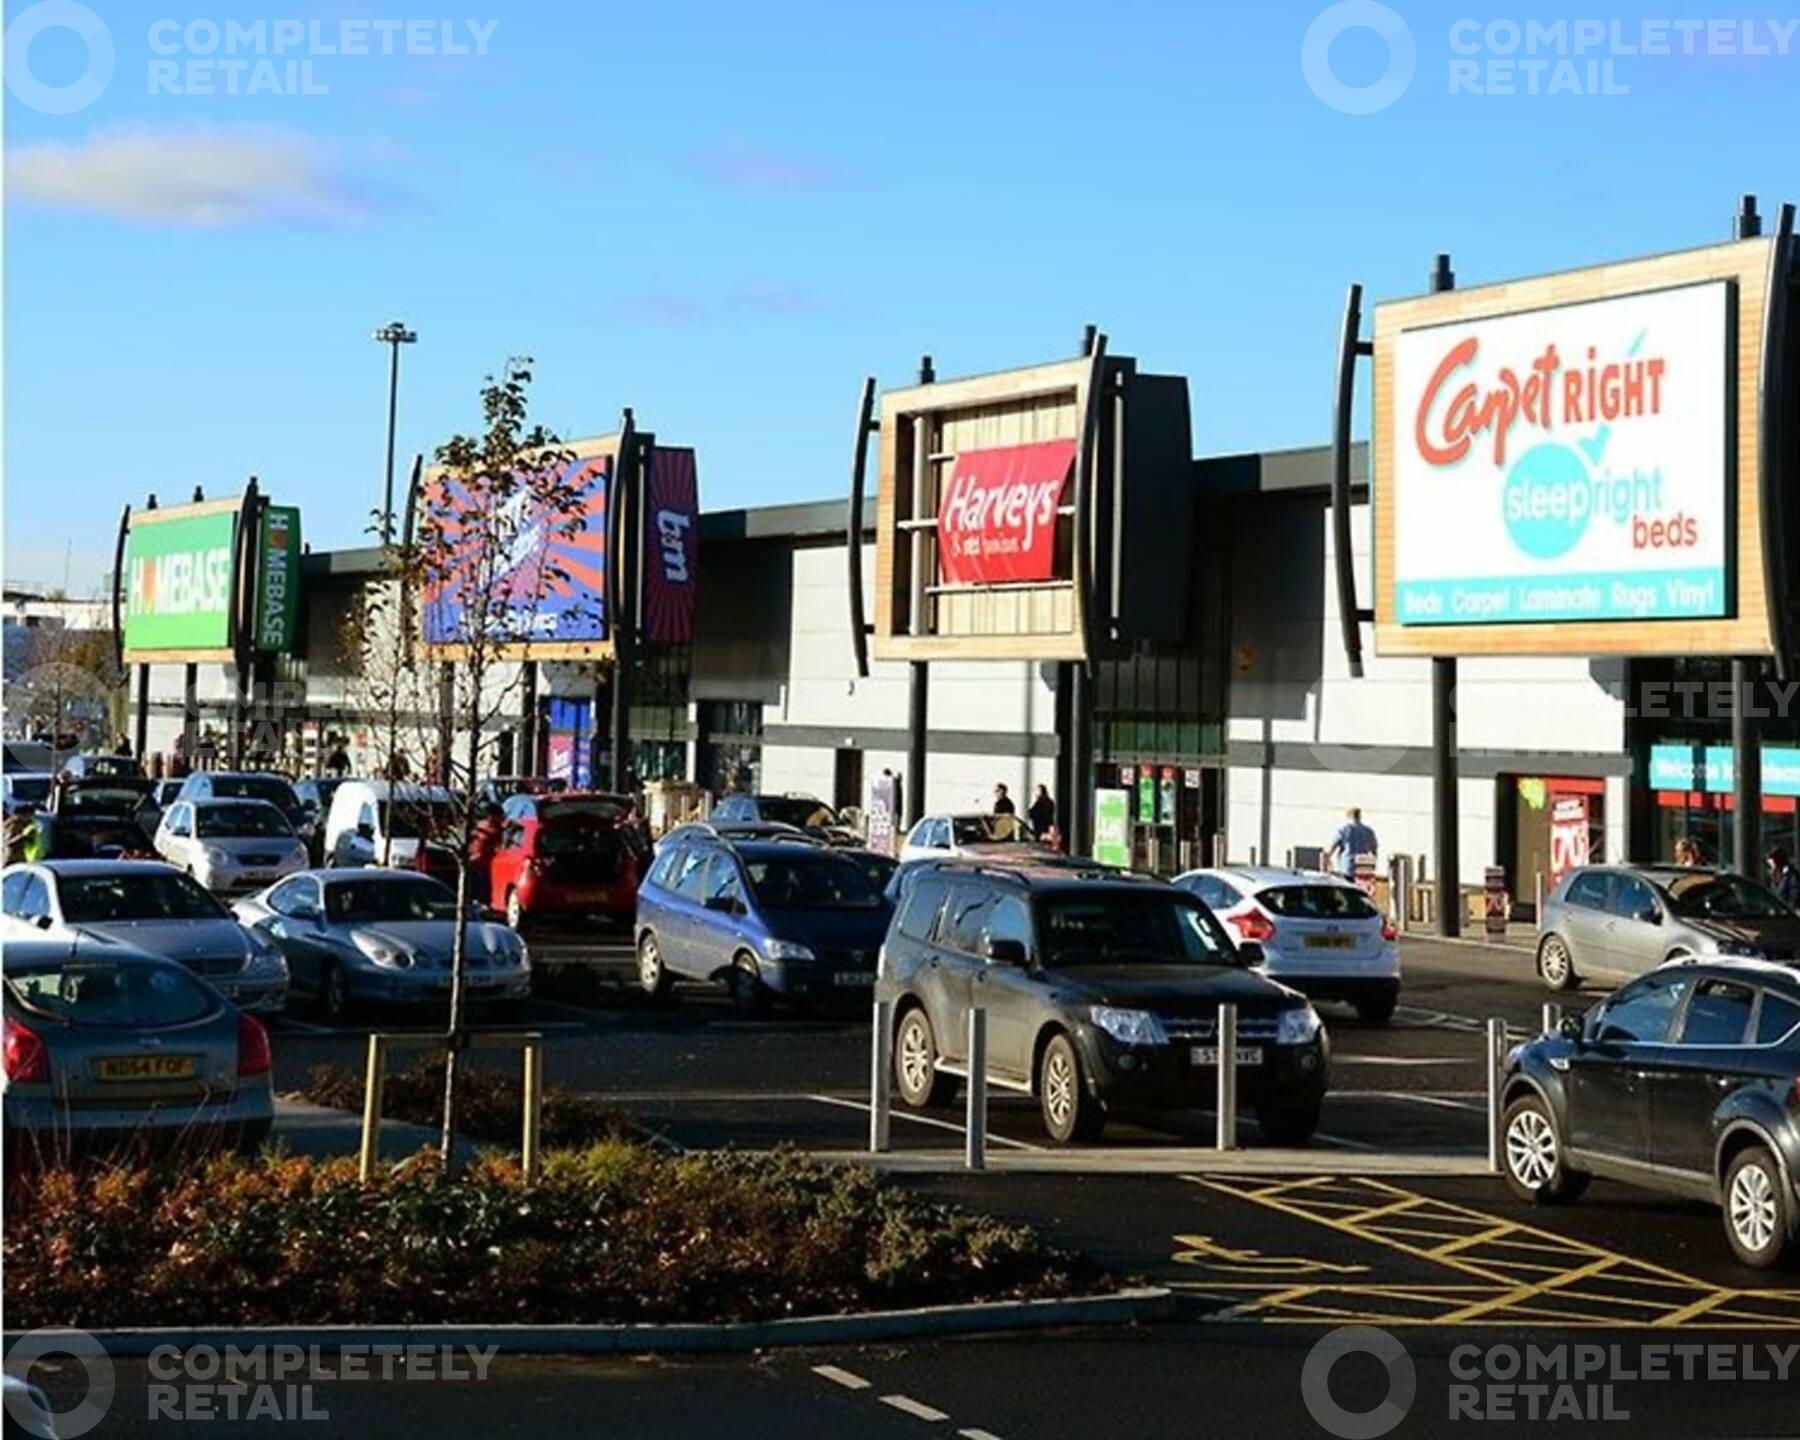 Halbeath Retail Park